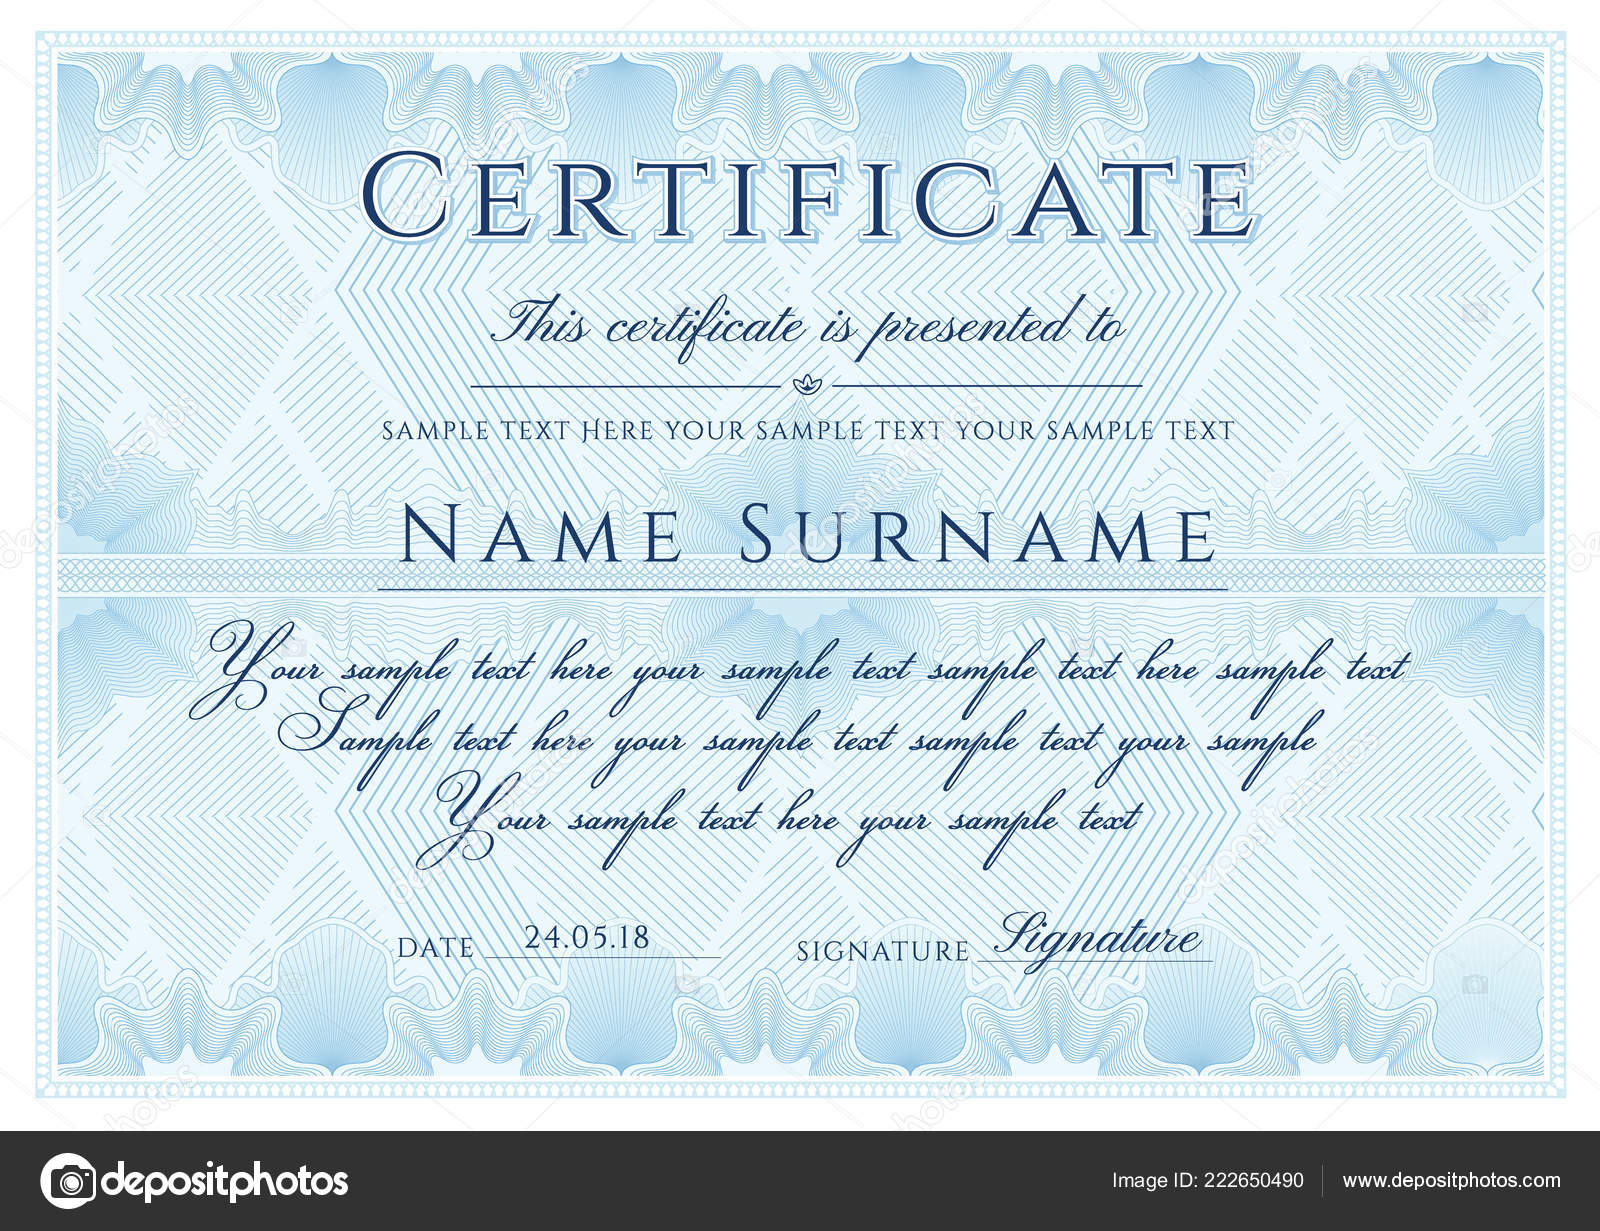 Formal Certificate Template | Certificate Template Formal For Formal Certificate Of Appreciation Template